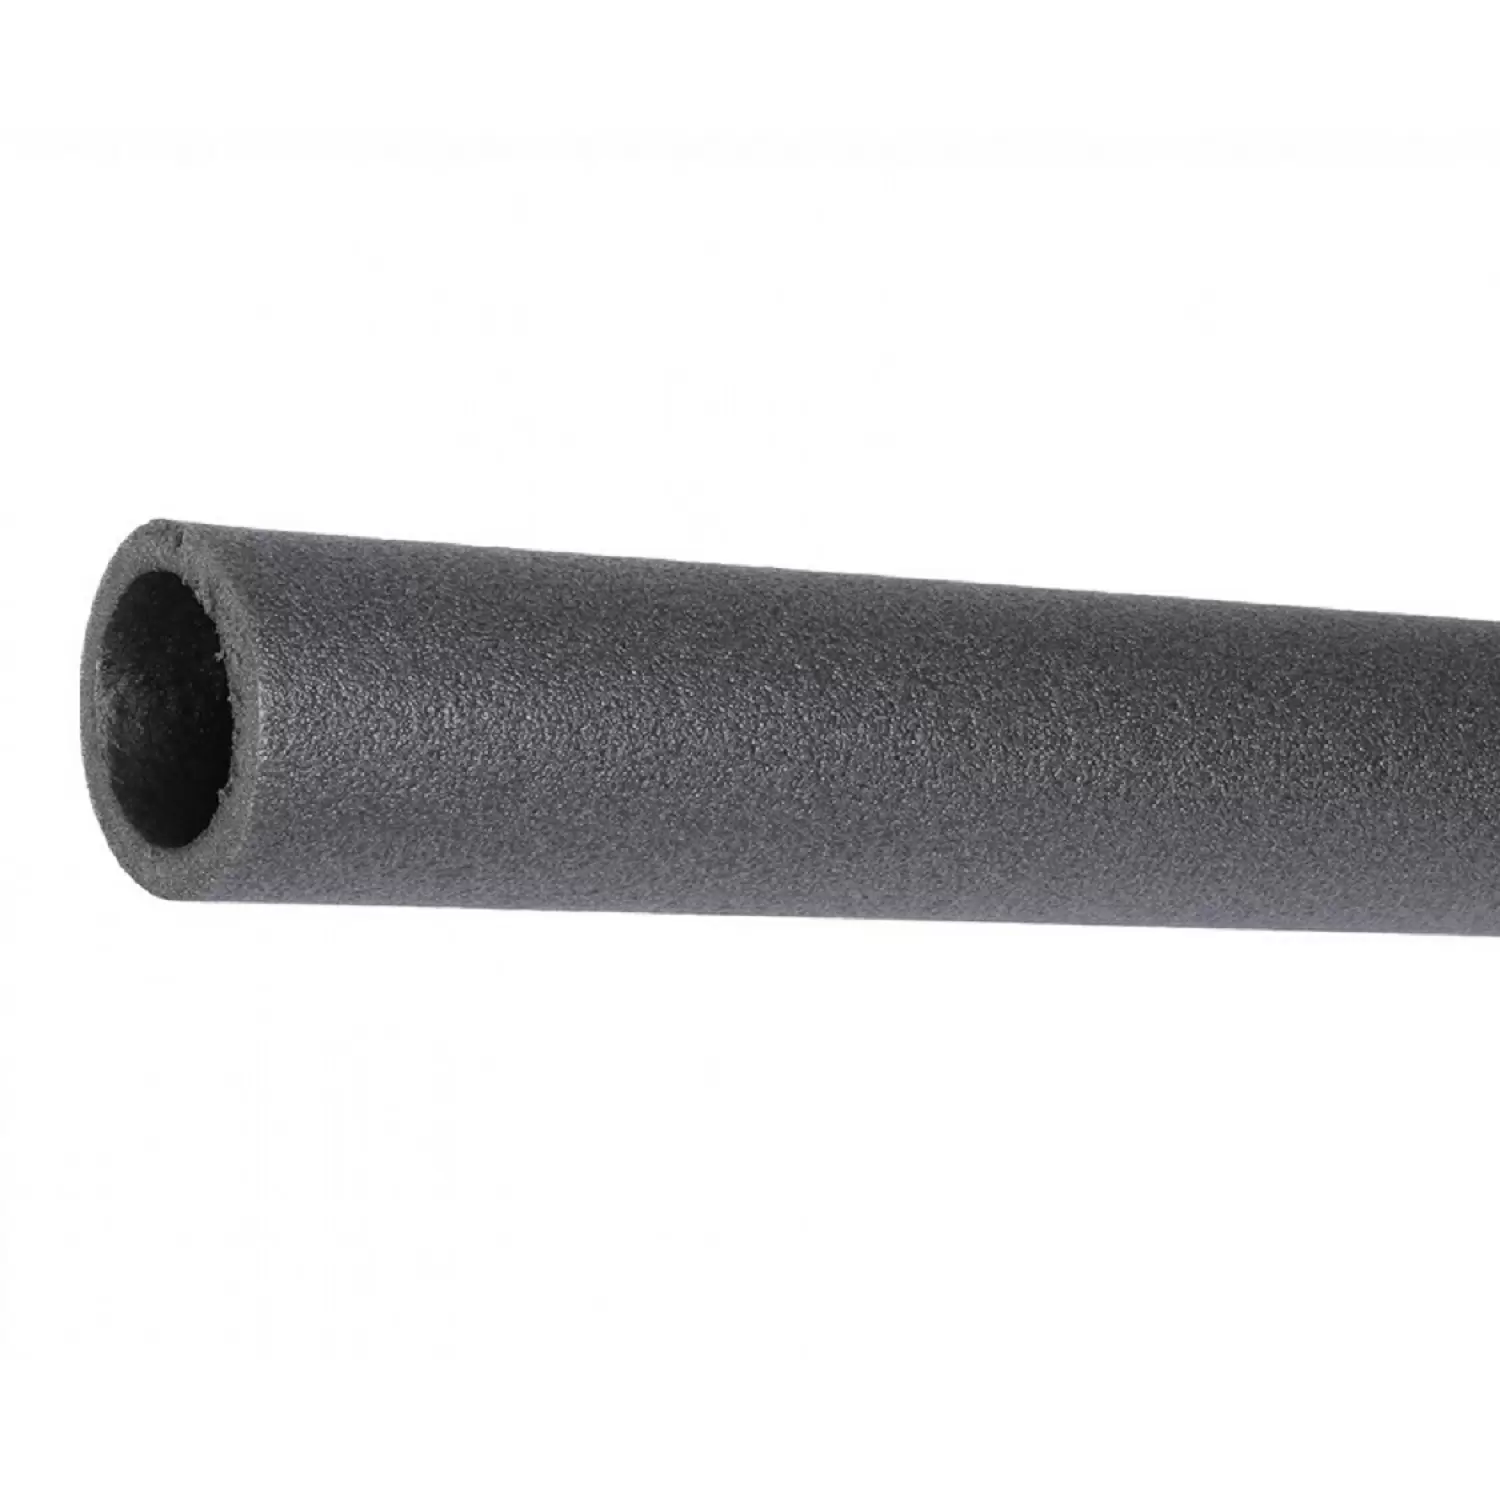 Теплоизоляция Энергофлекс супер 18/9 для труб диаметром 16 мм, трубка 2 м